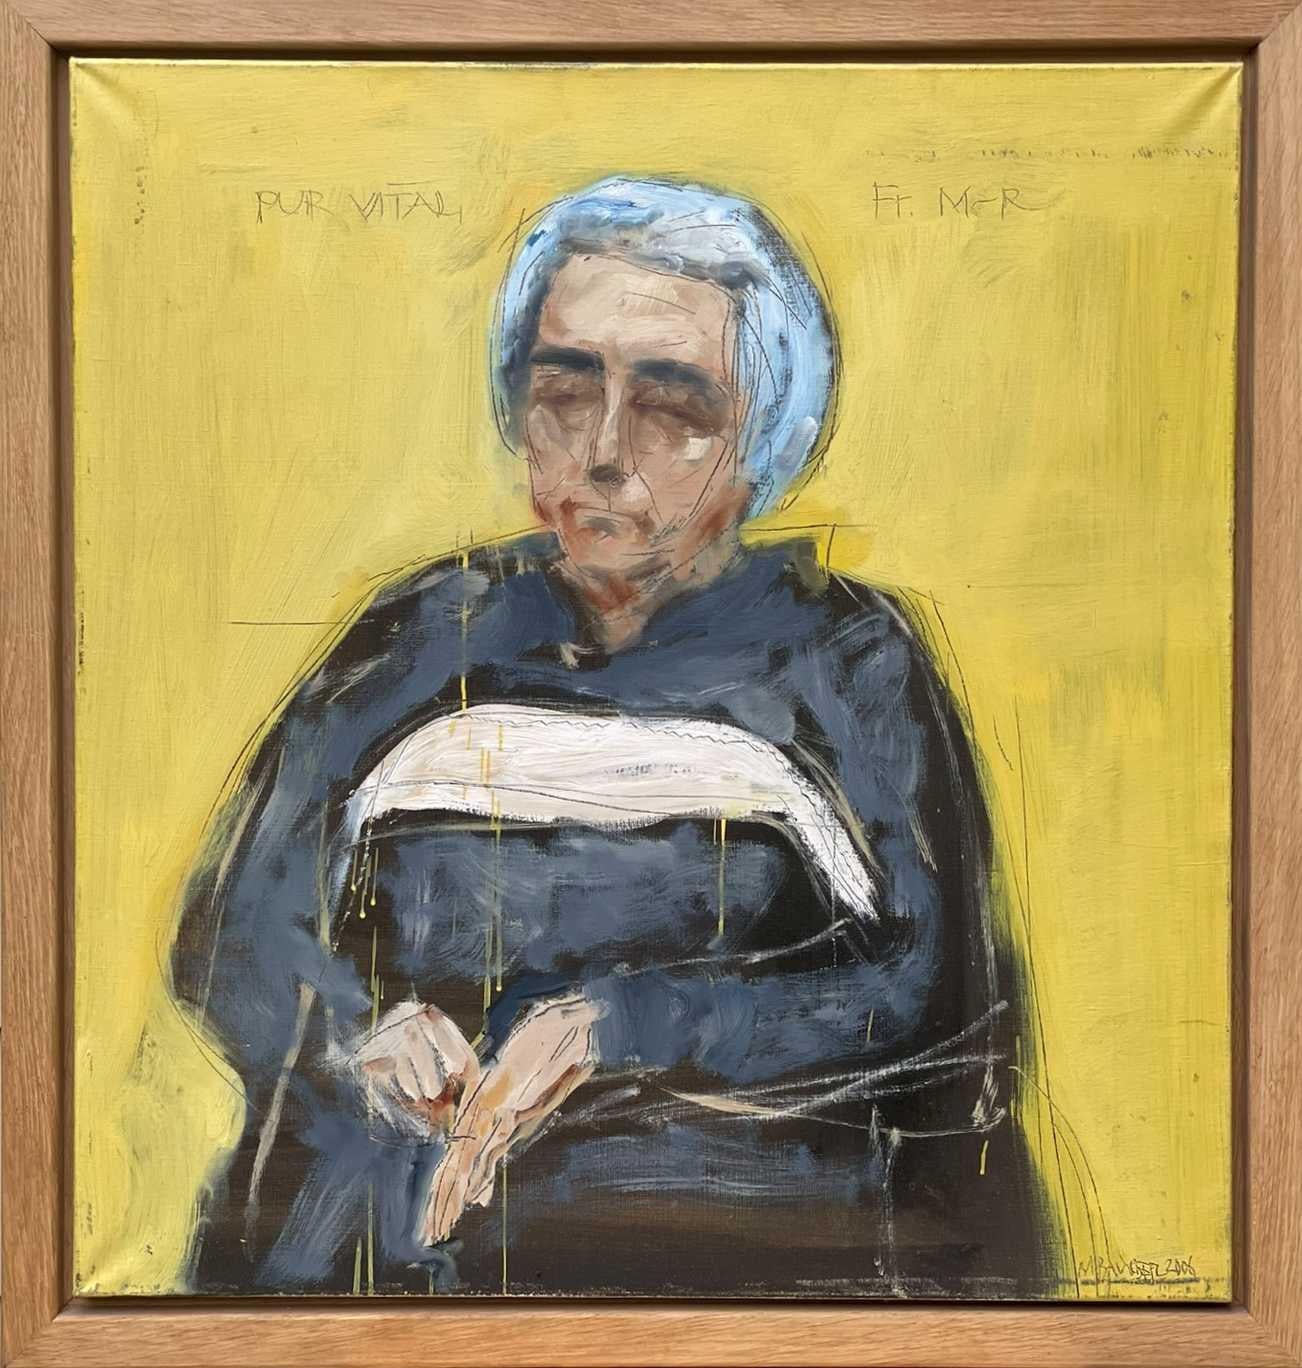 Matviy Vaisberg Portrait Painting - Fr. M-R